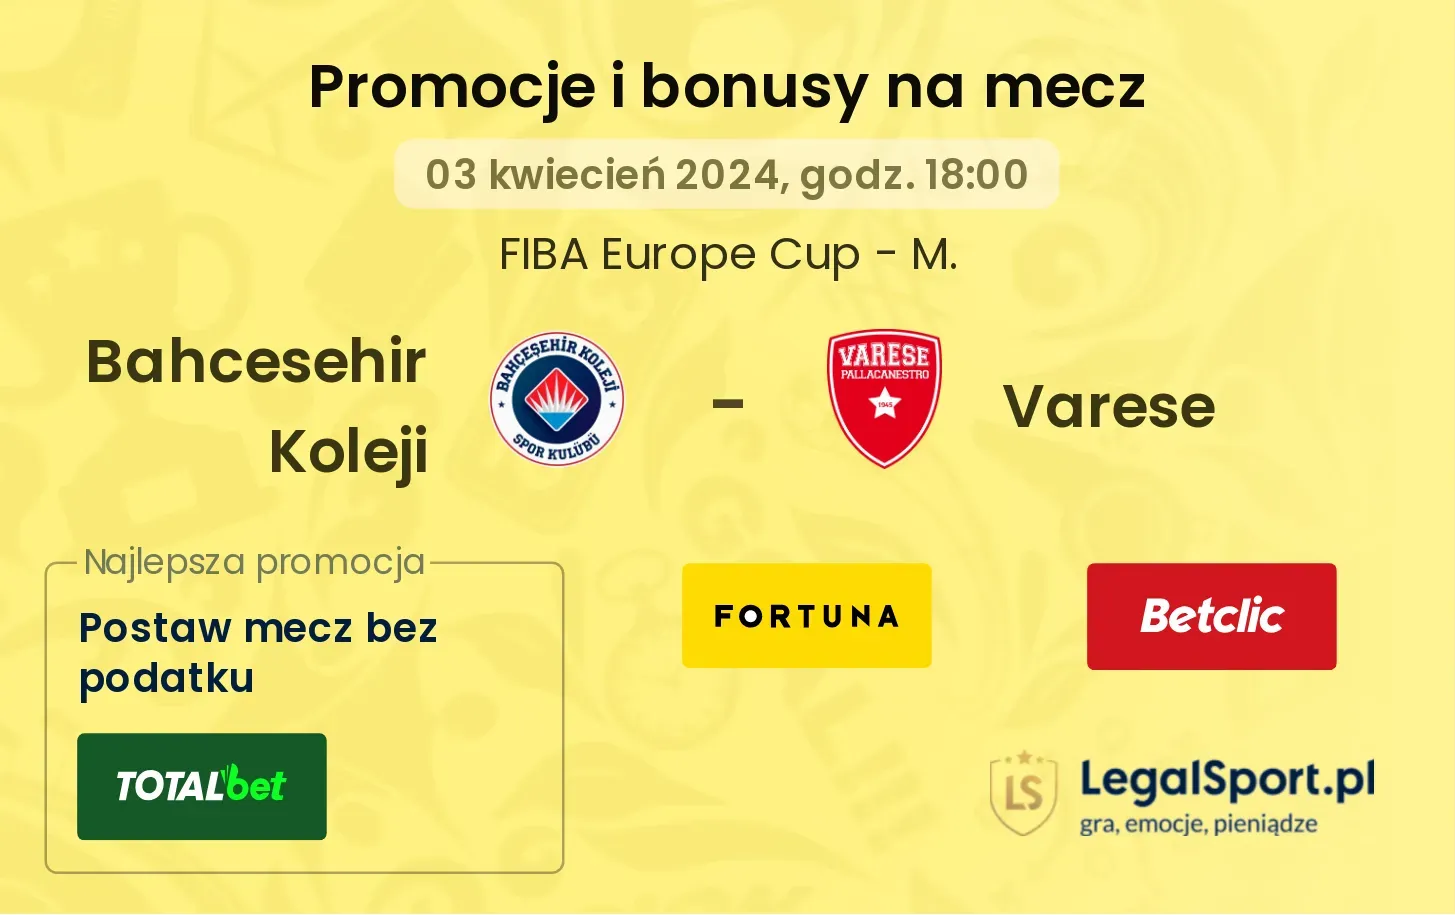 Bahcesehir Koleji - Varese promocje bonusy na mecz